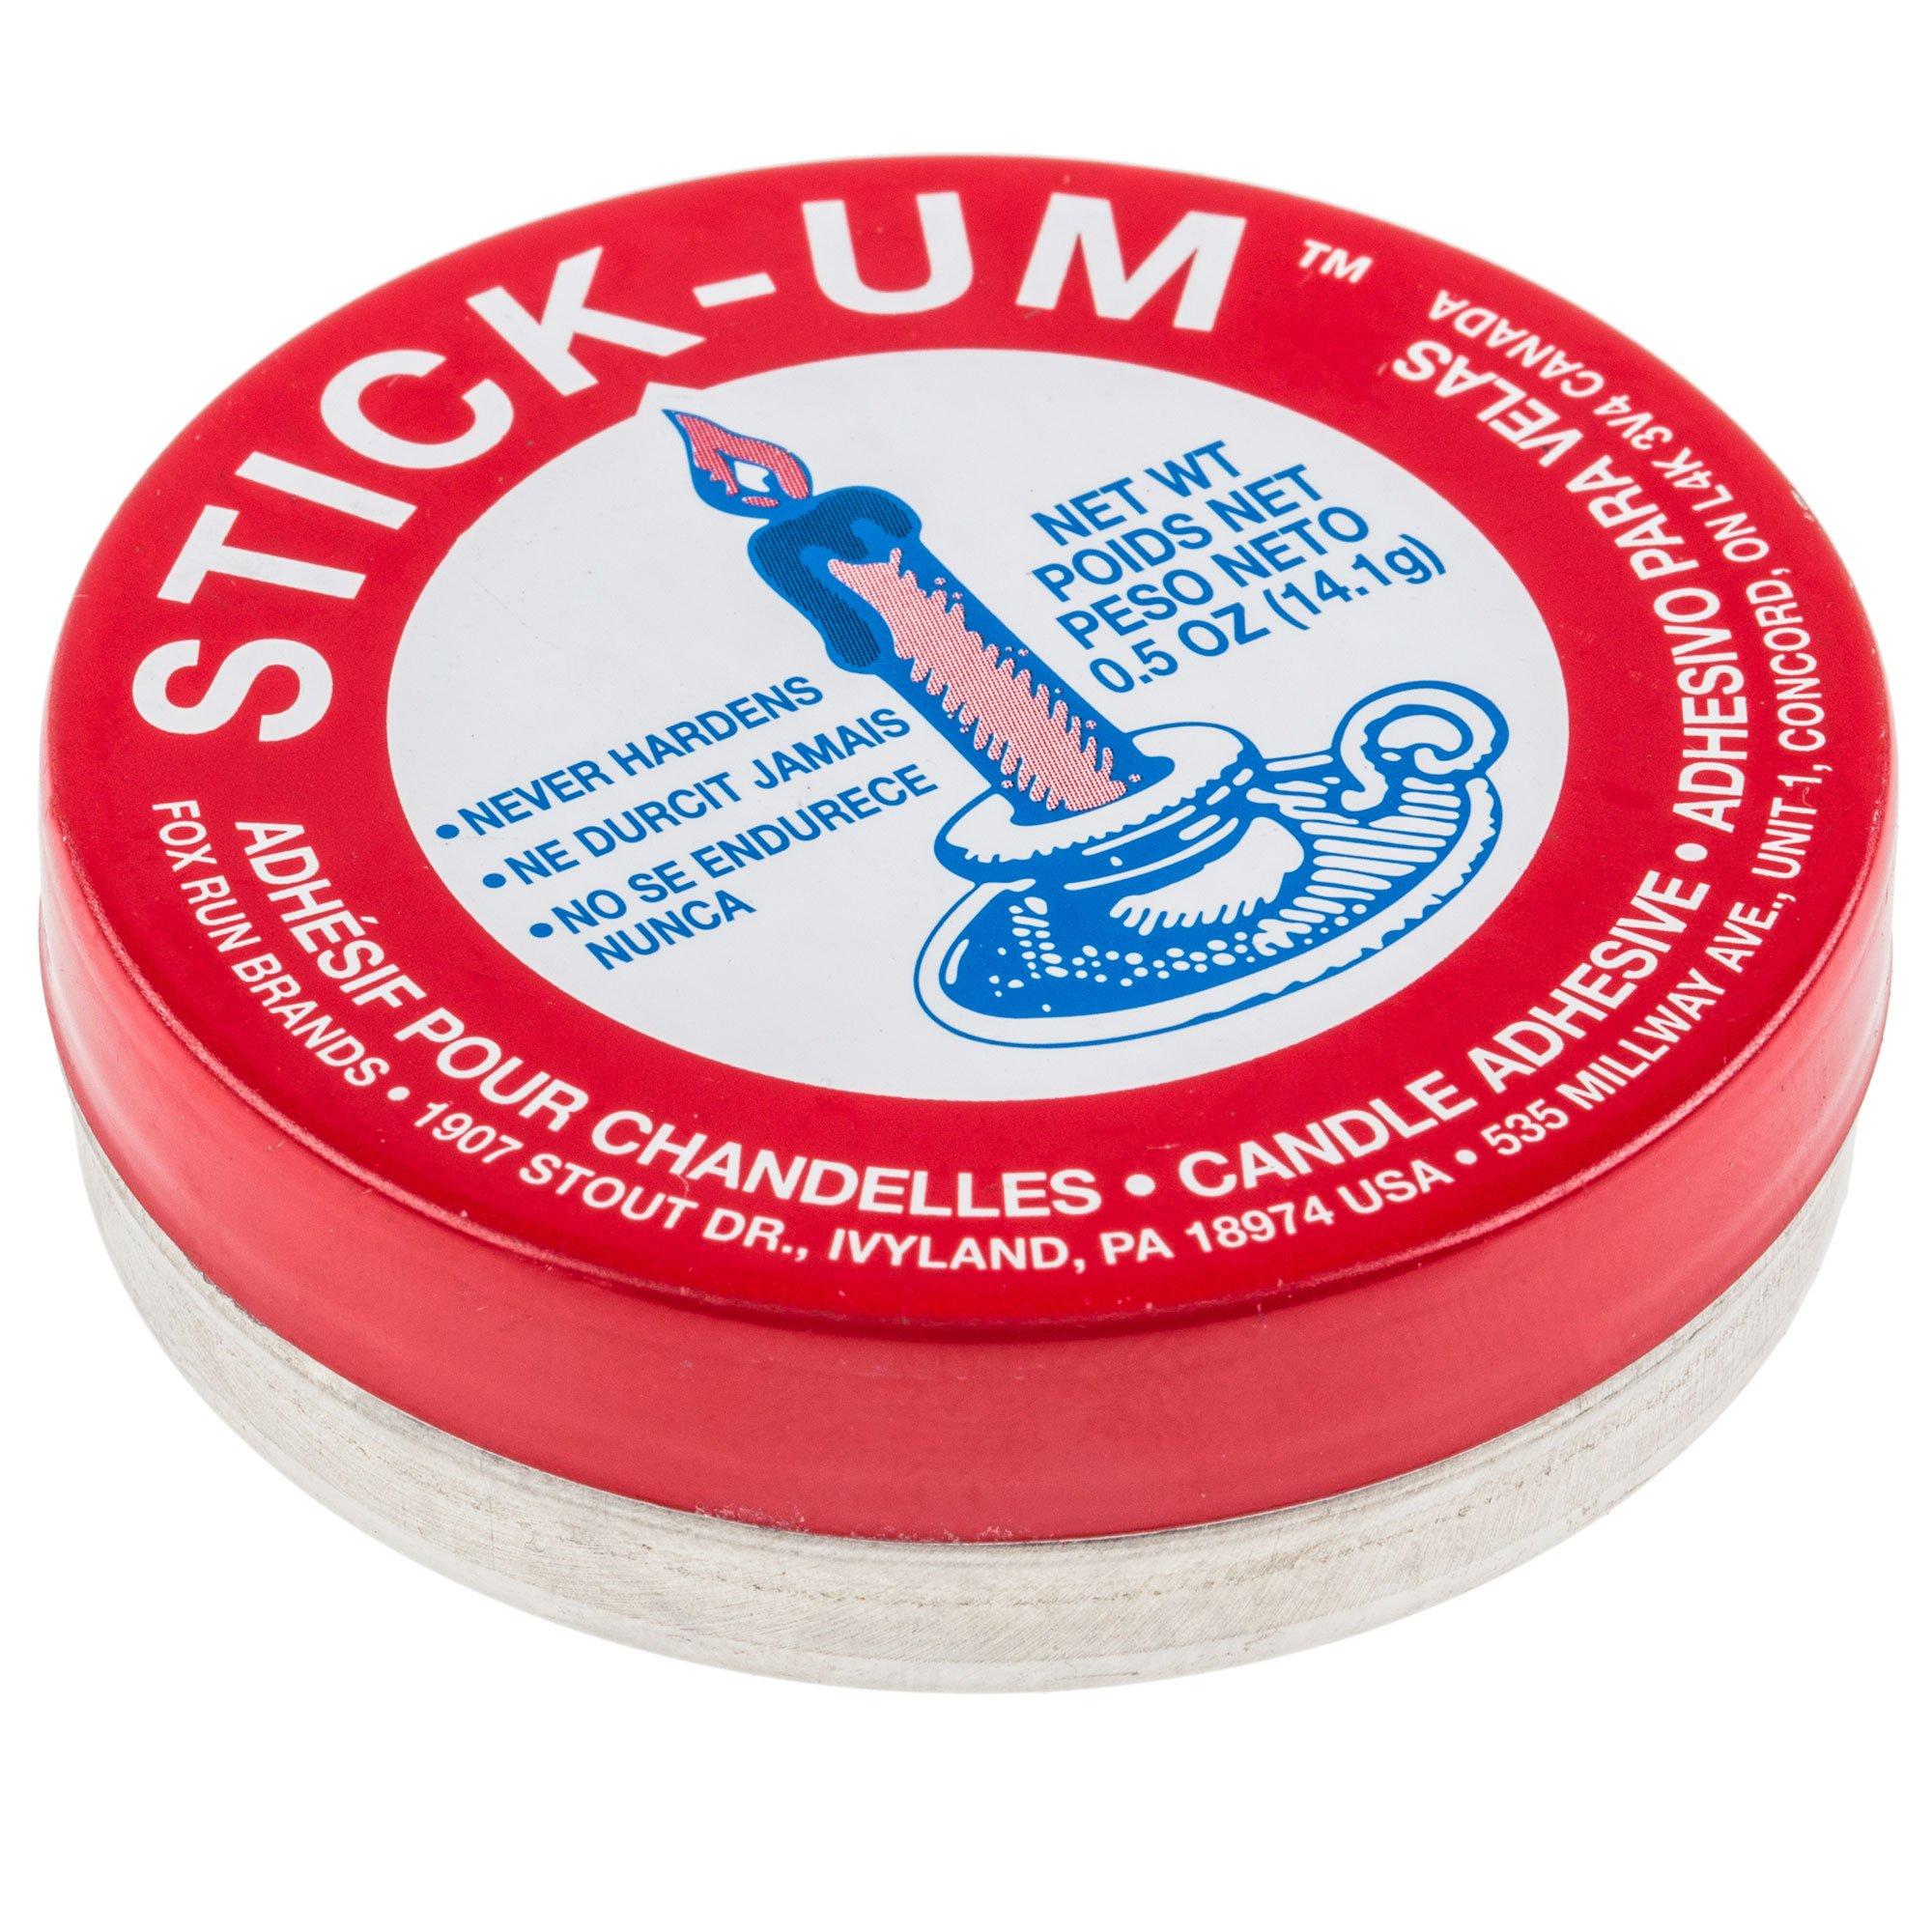 STICK-UM Candle Adhesive Glue Old Craftsmen's Indian Brand stickum stickem  3100